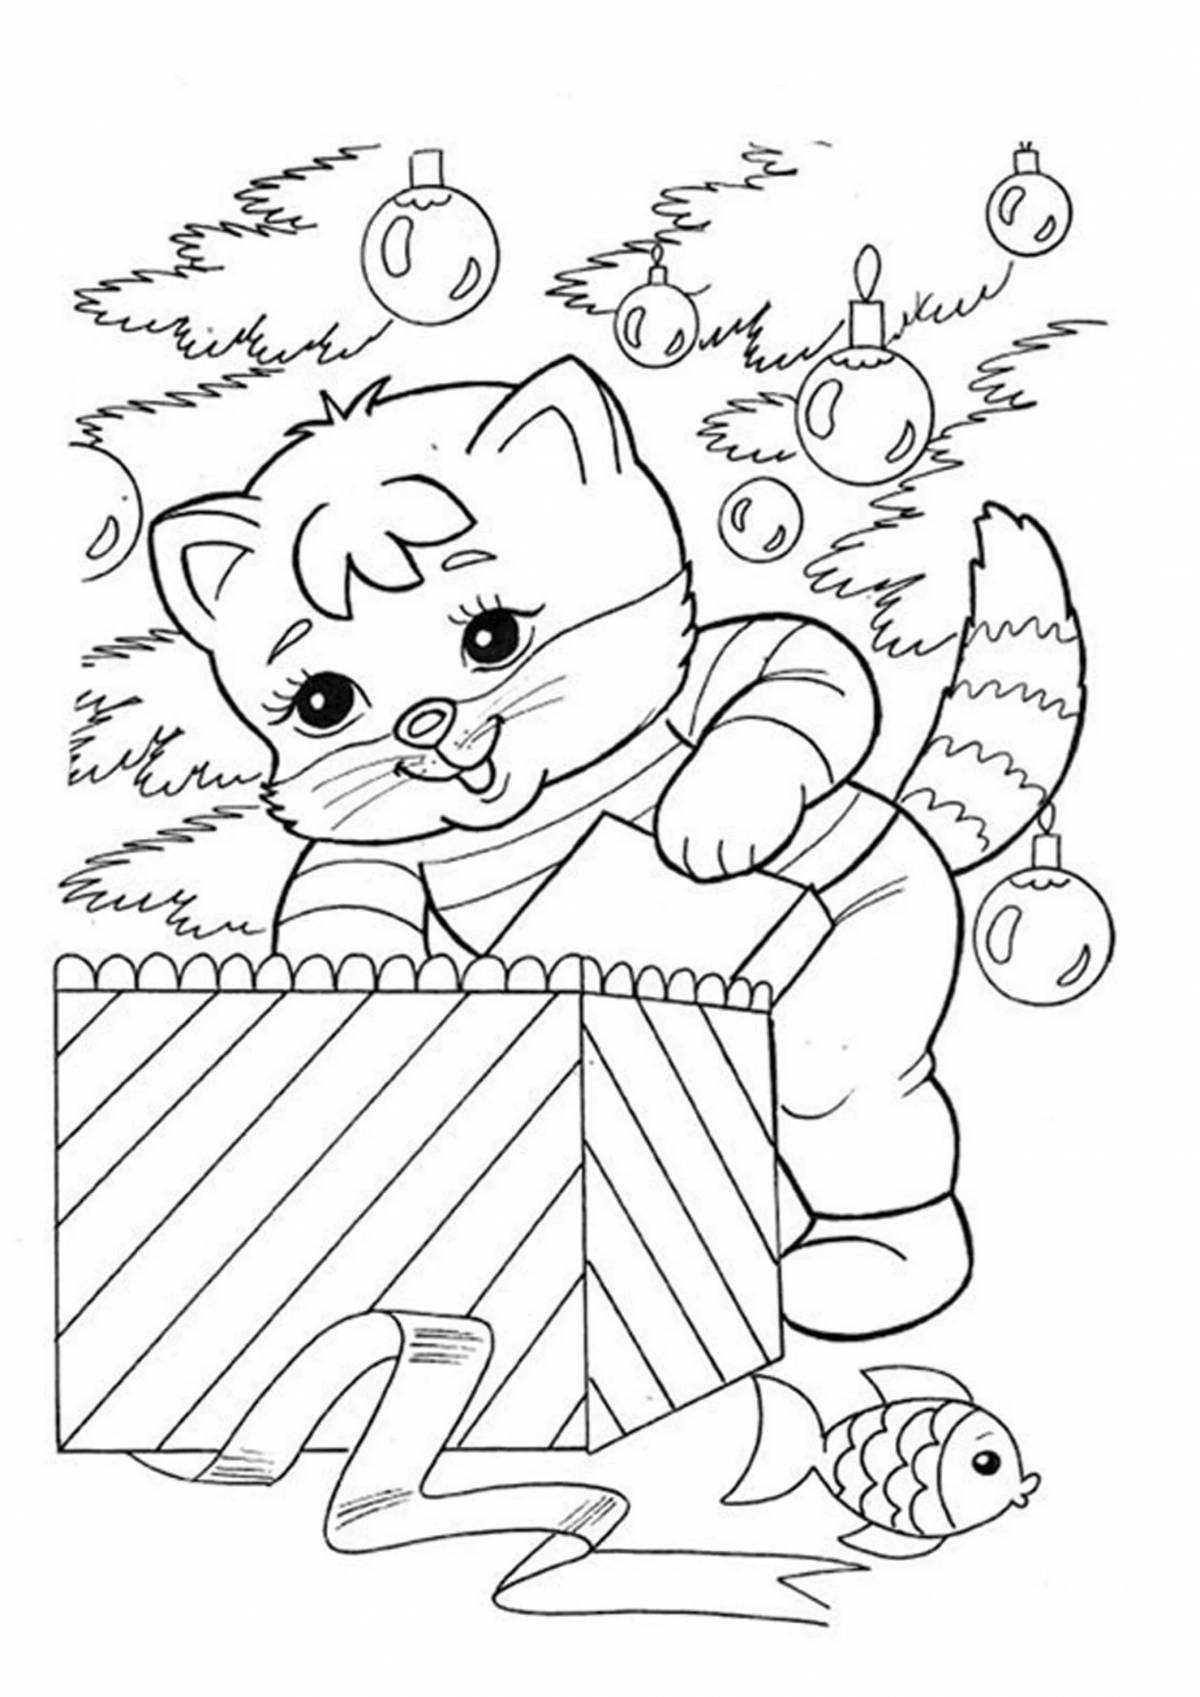 Magical Christmas cat coloring book